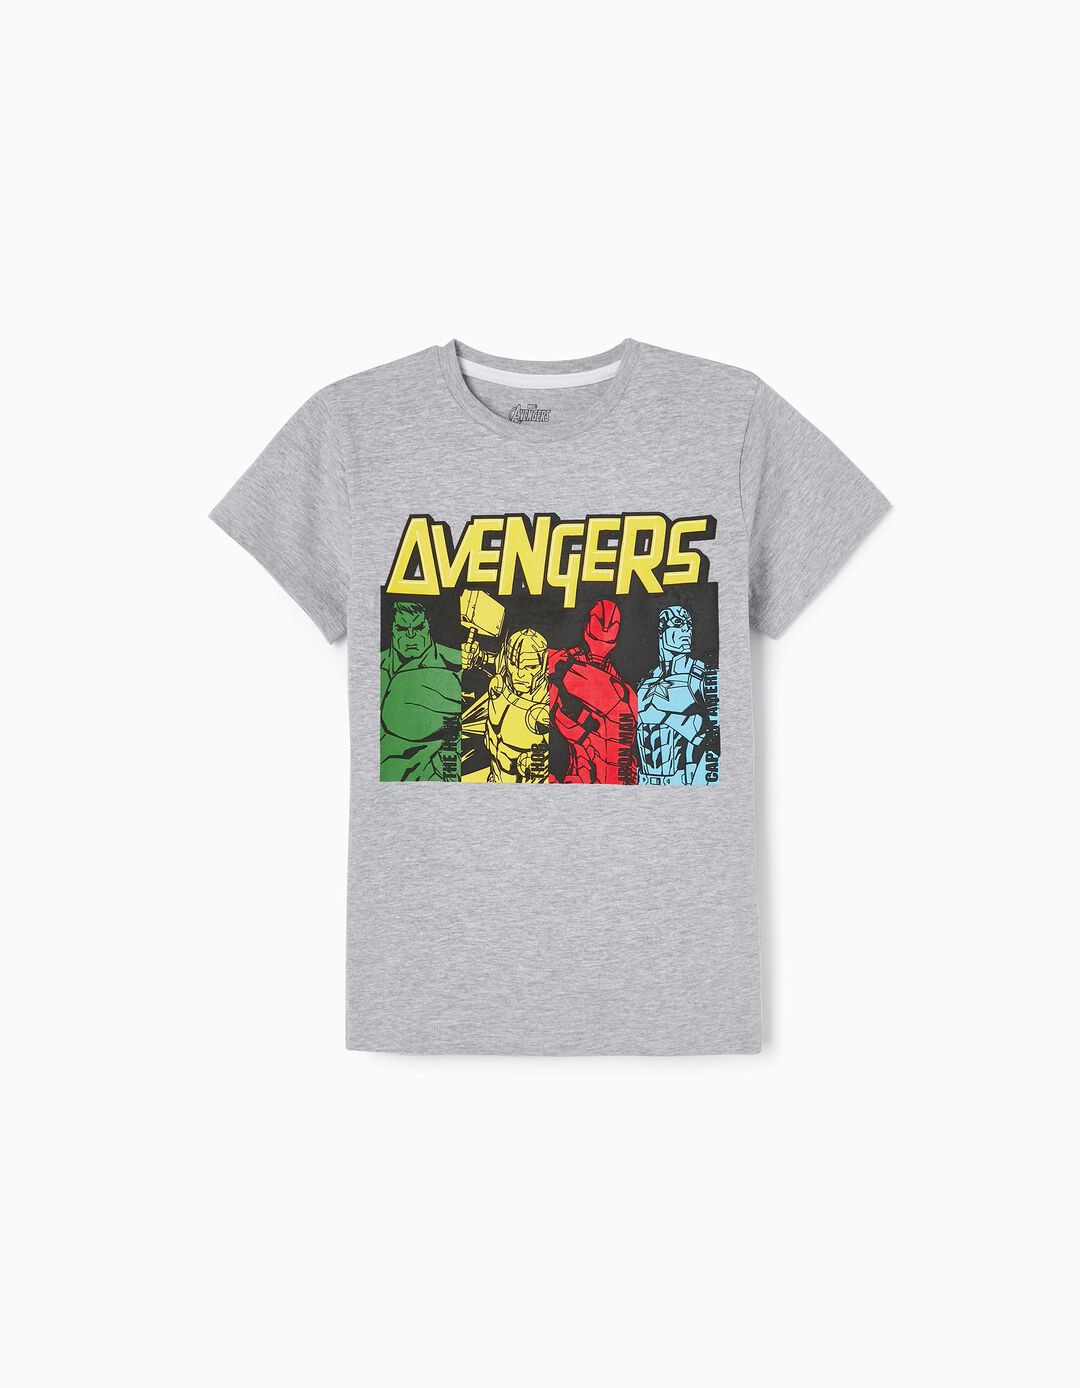 Cotton T-shirt for Boys 'Avengers', Grey